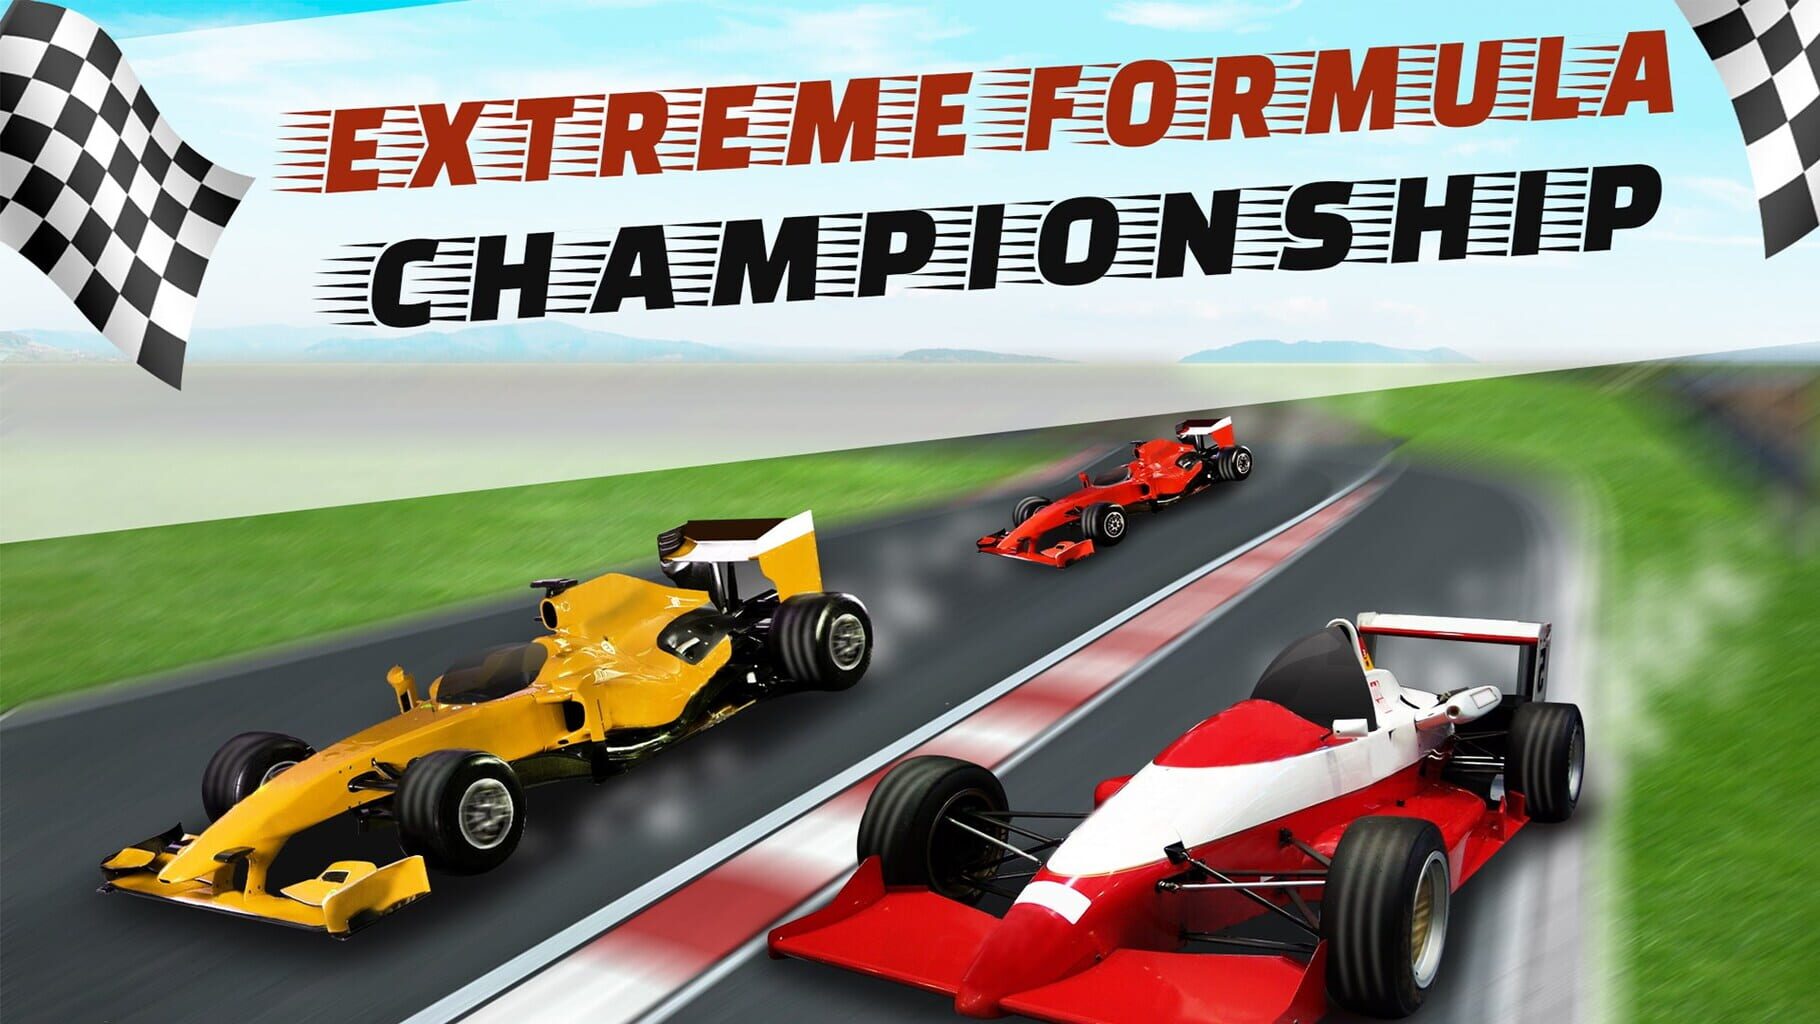 Arte - Extreme Formula Championship